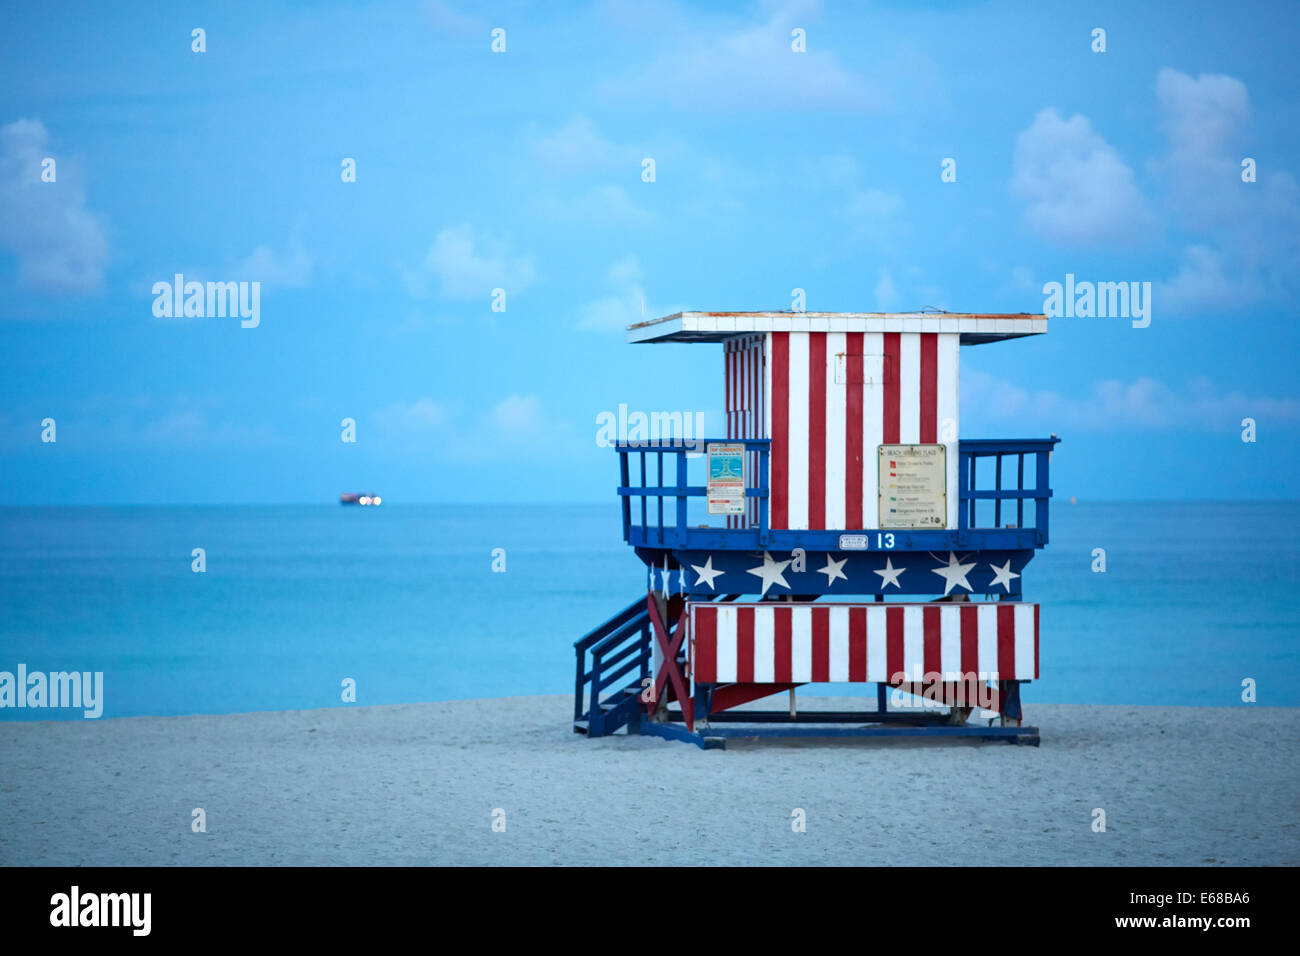 Tourist attraction beach hut on South beach in Miami Stock Photo